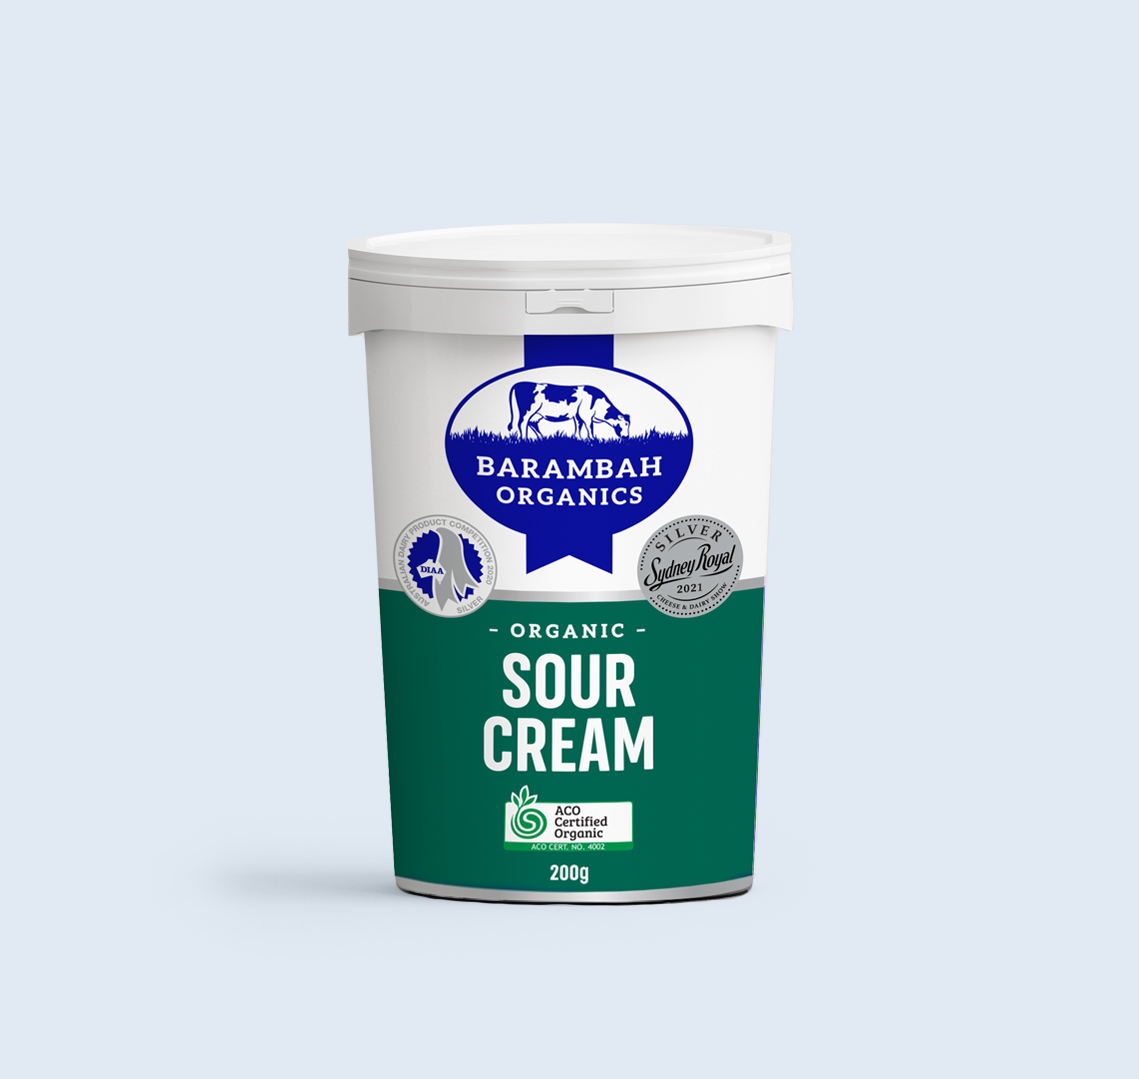 200g of Organic Sour Cream - Organic Sour Cream - Barambah Organics